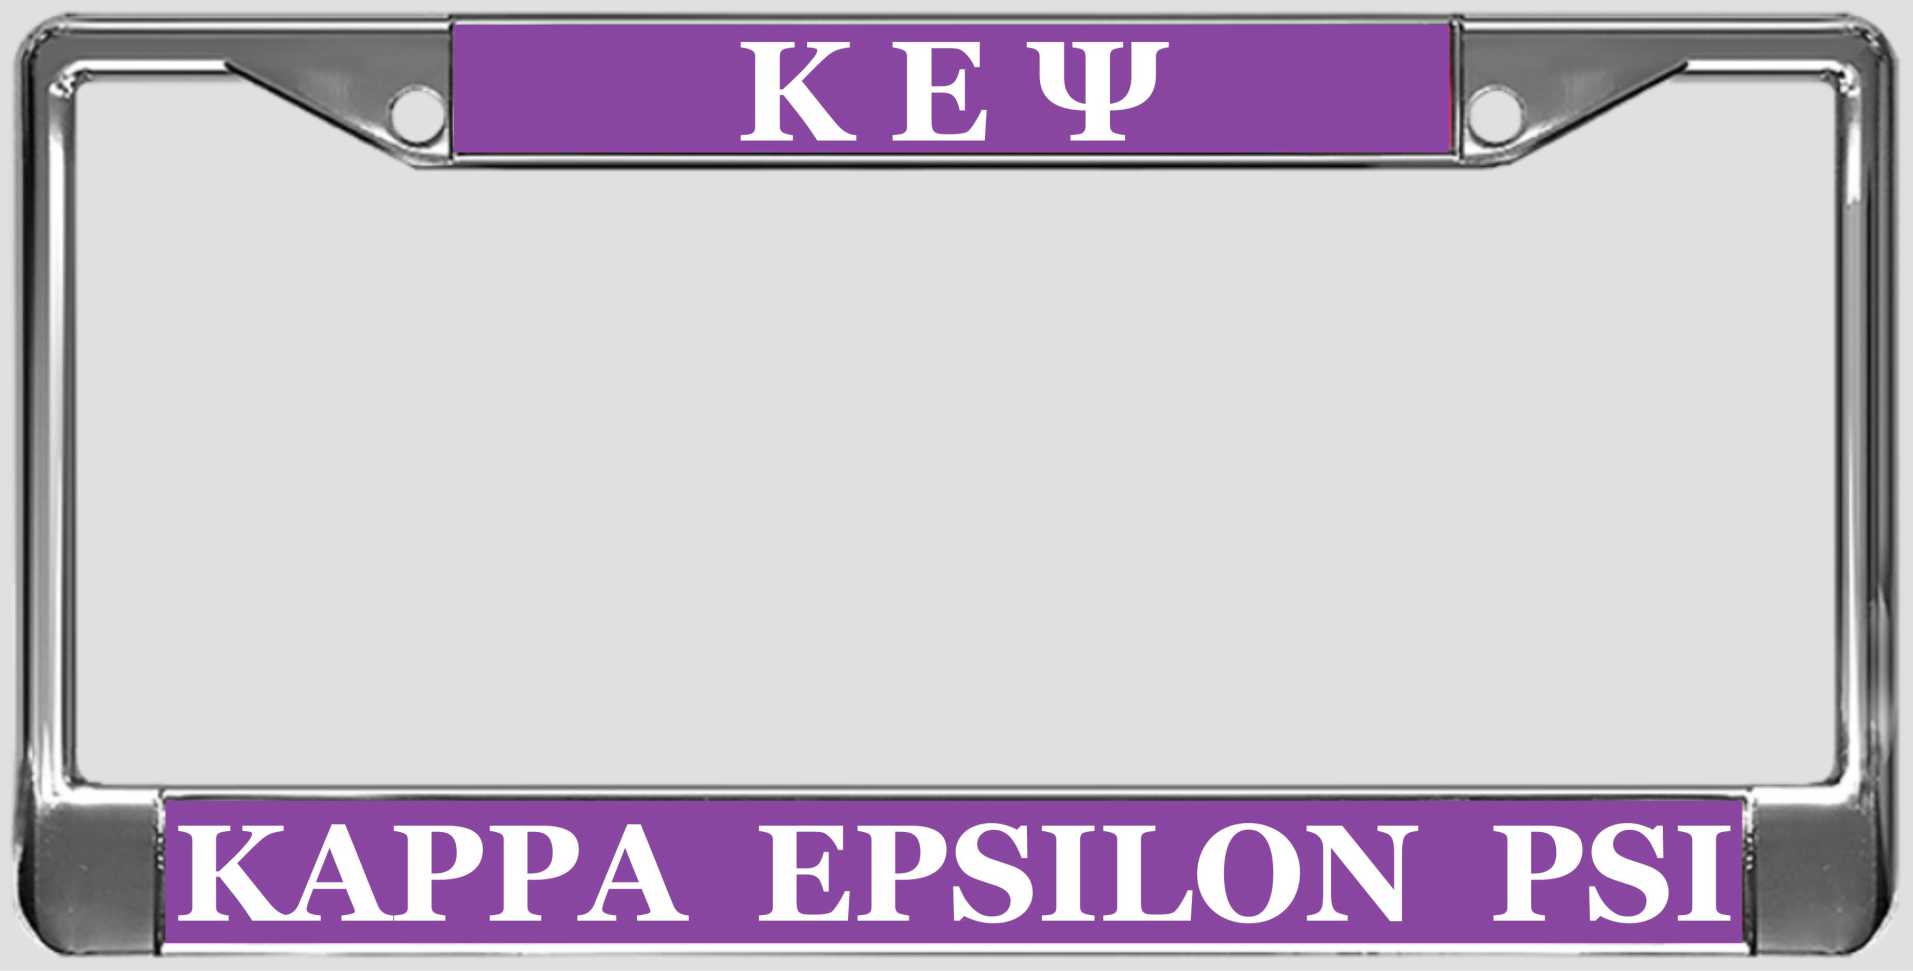 Custom Metal License Plate Frame KEP